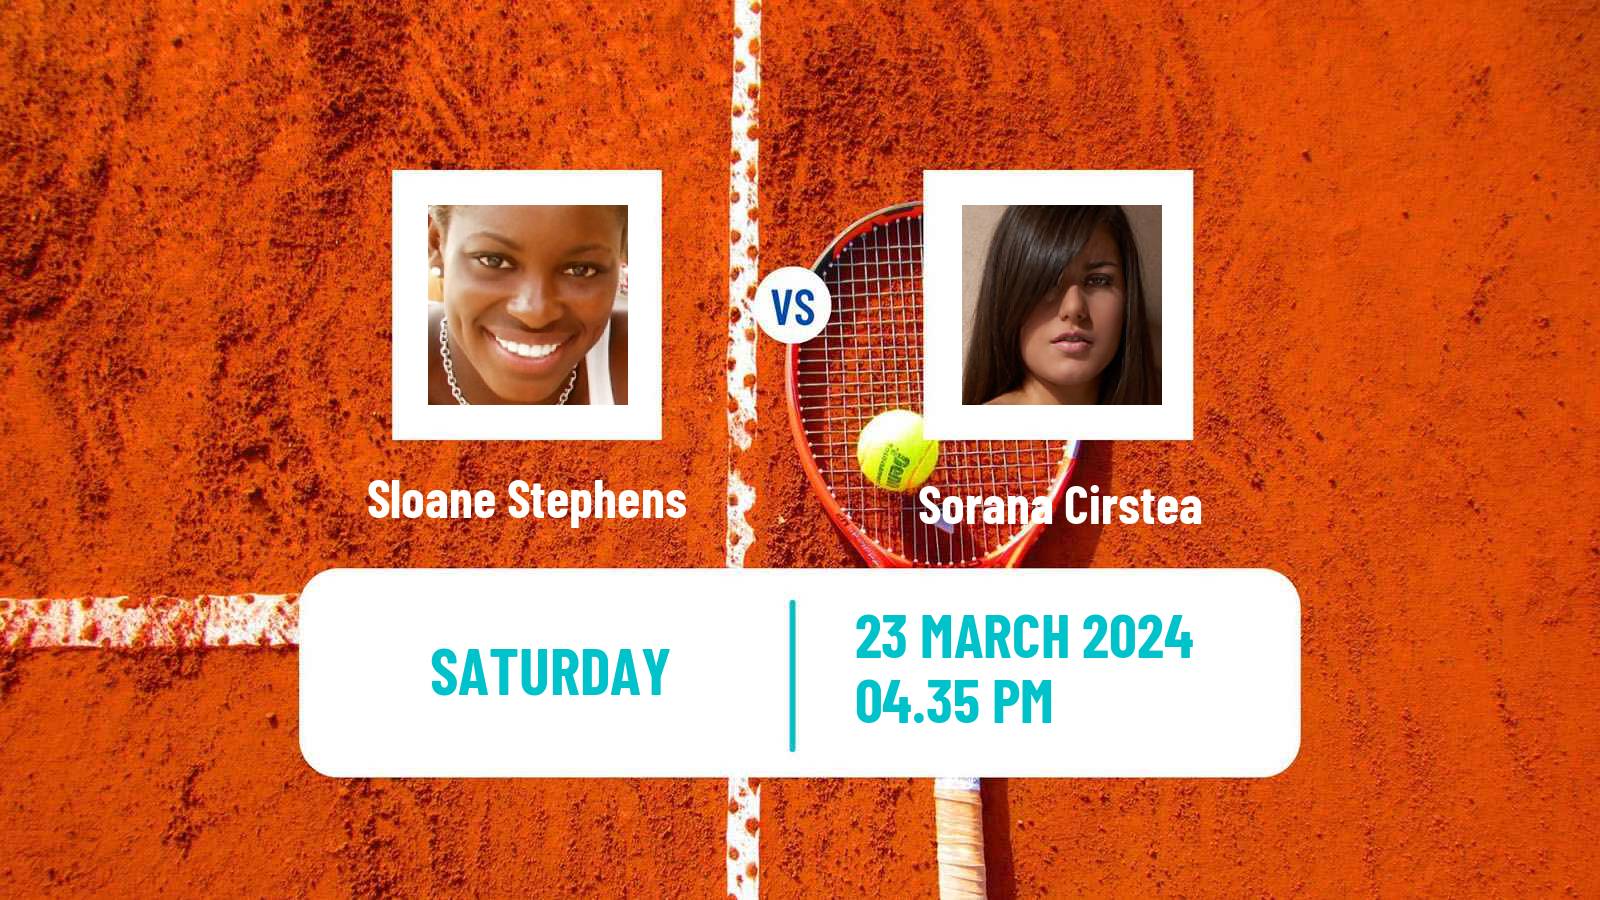 Tennis WTA Miami Sloane Stephens - Sorana Cirstea